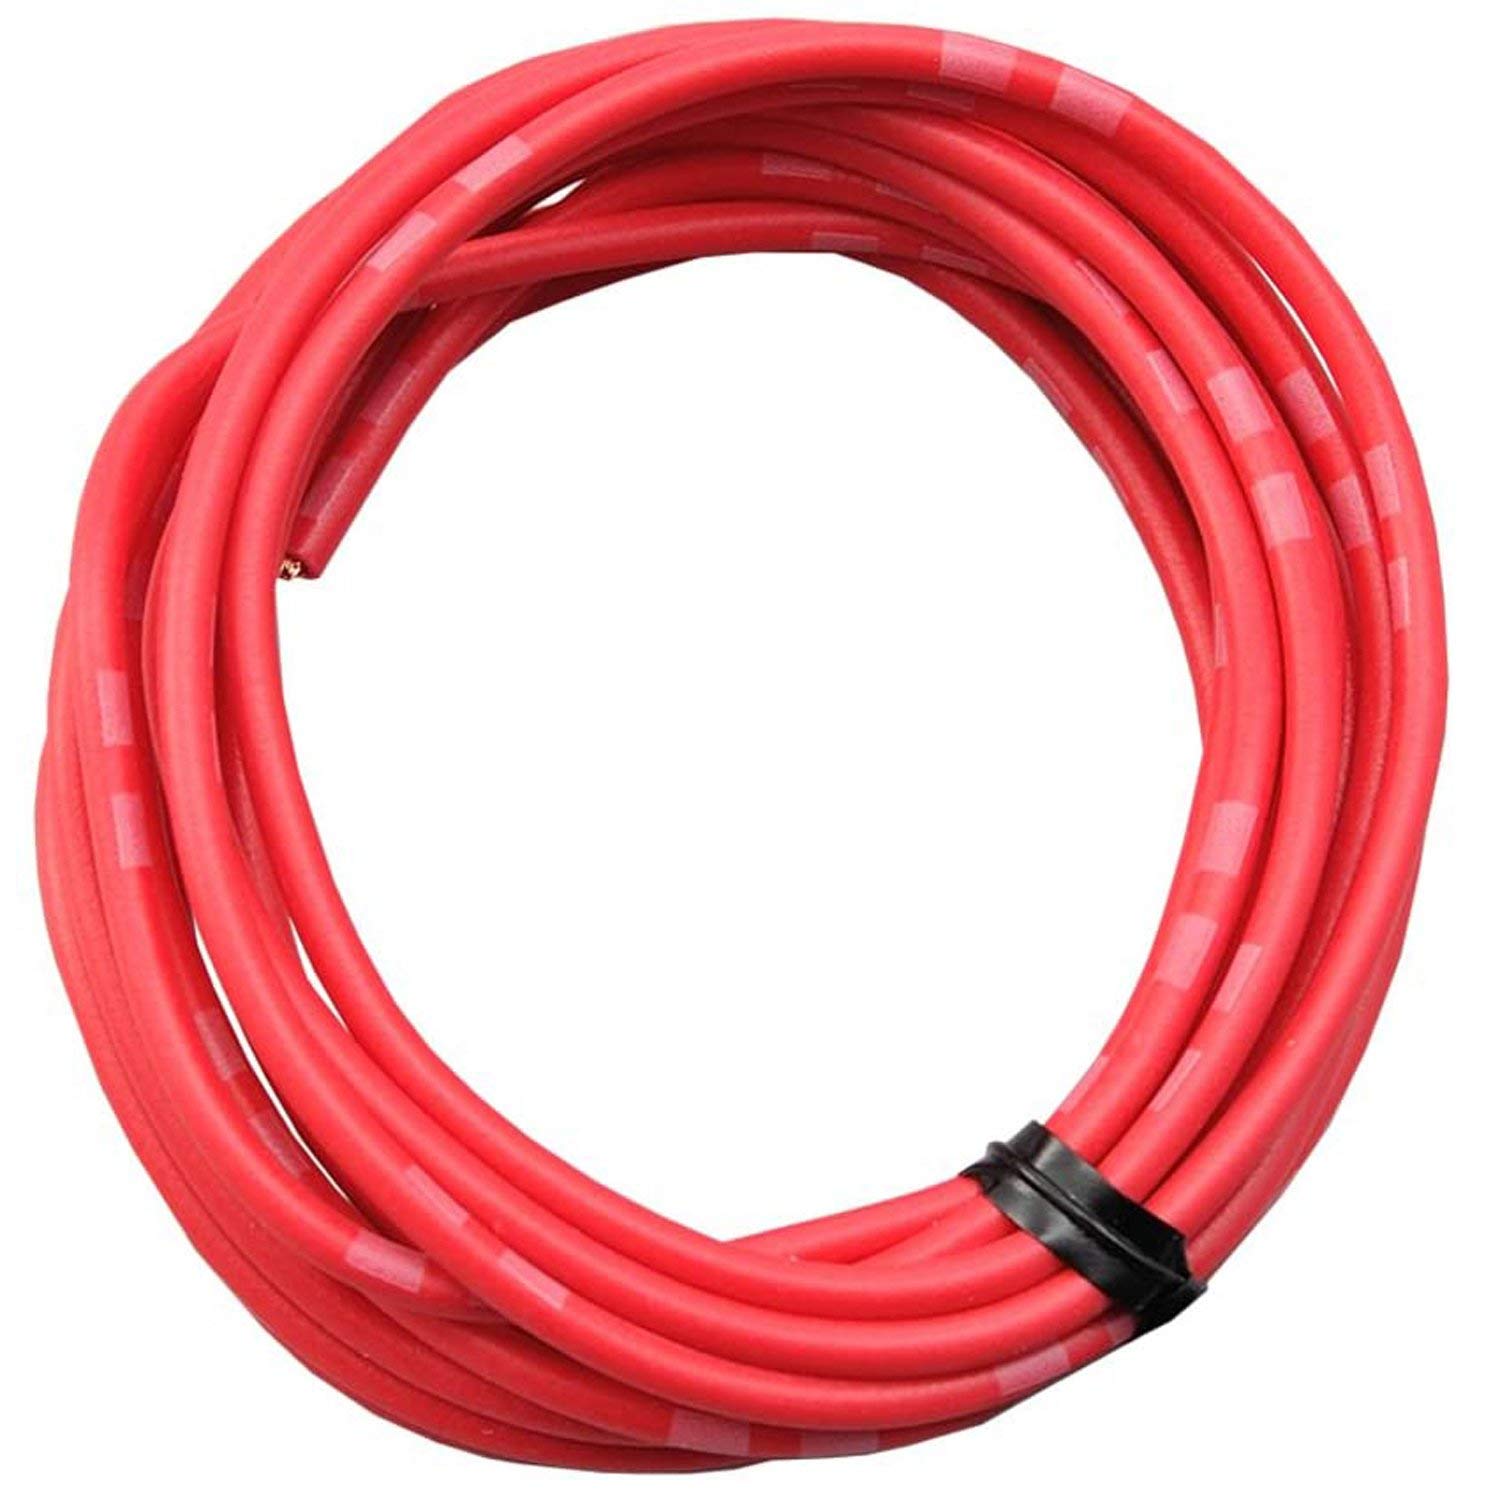 DAYTONA farbiges Kabel AWG18 0.75qmm, 2 Meter, rot von Daytona